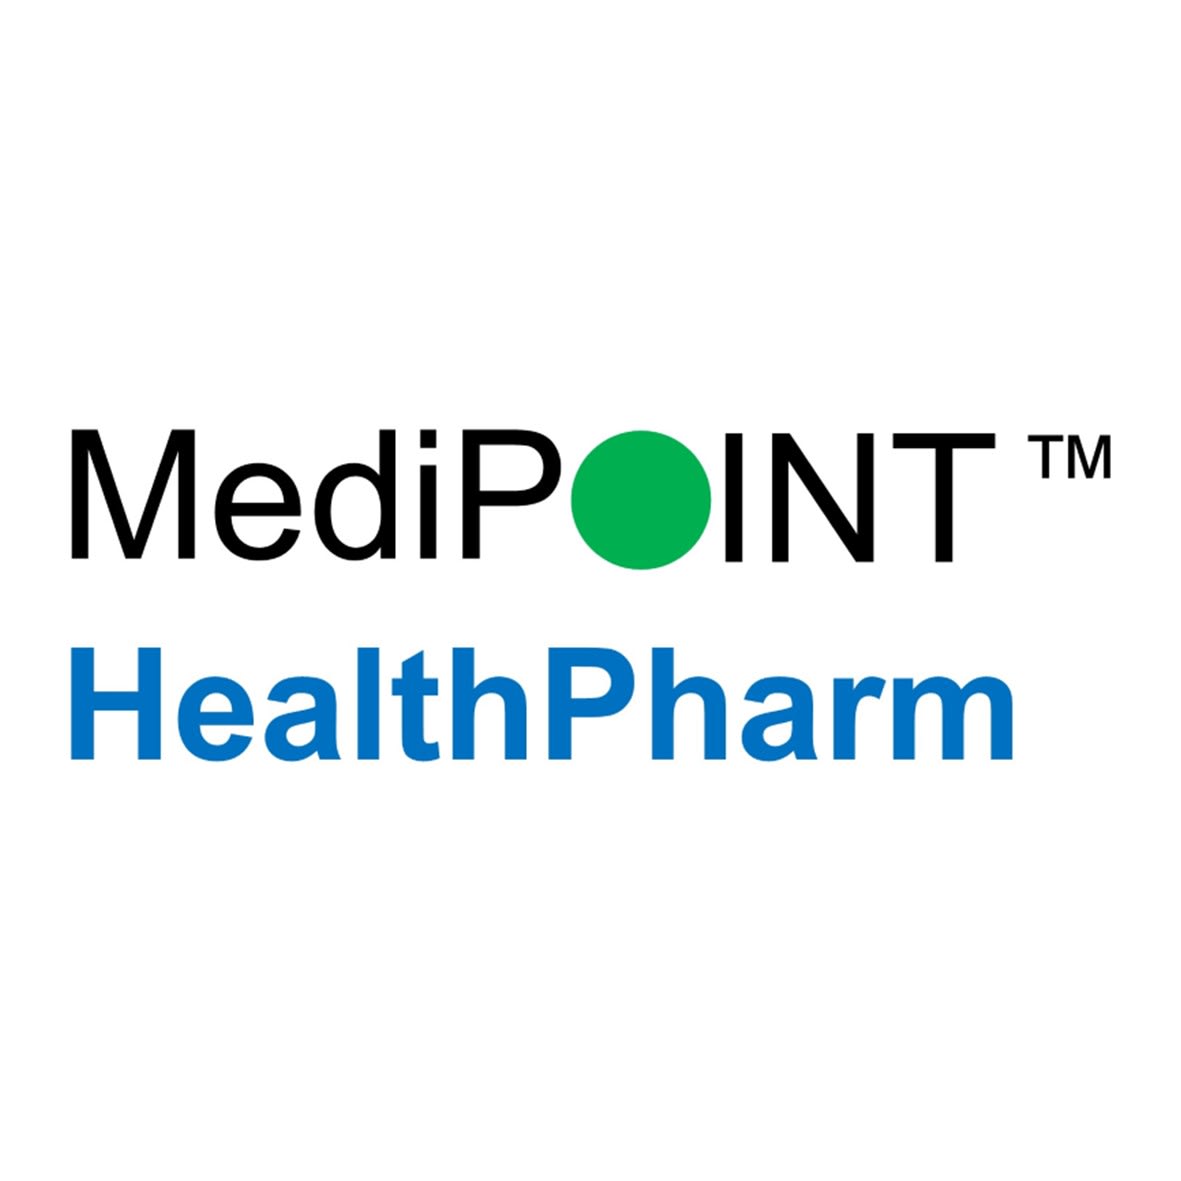 Medipoint Health Pharm